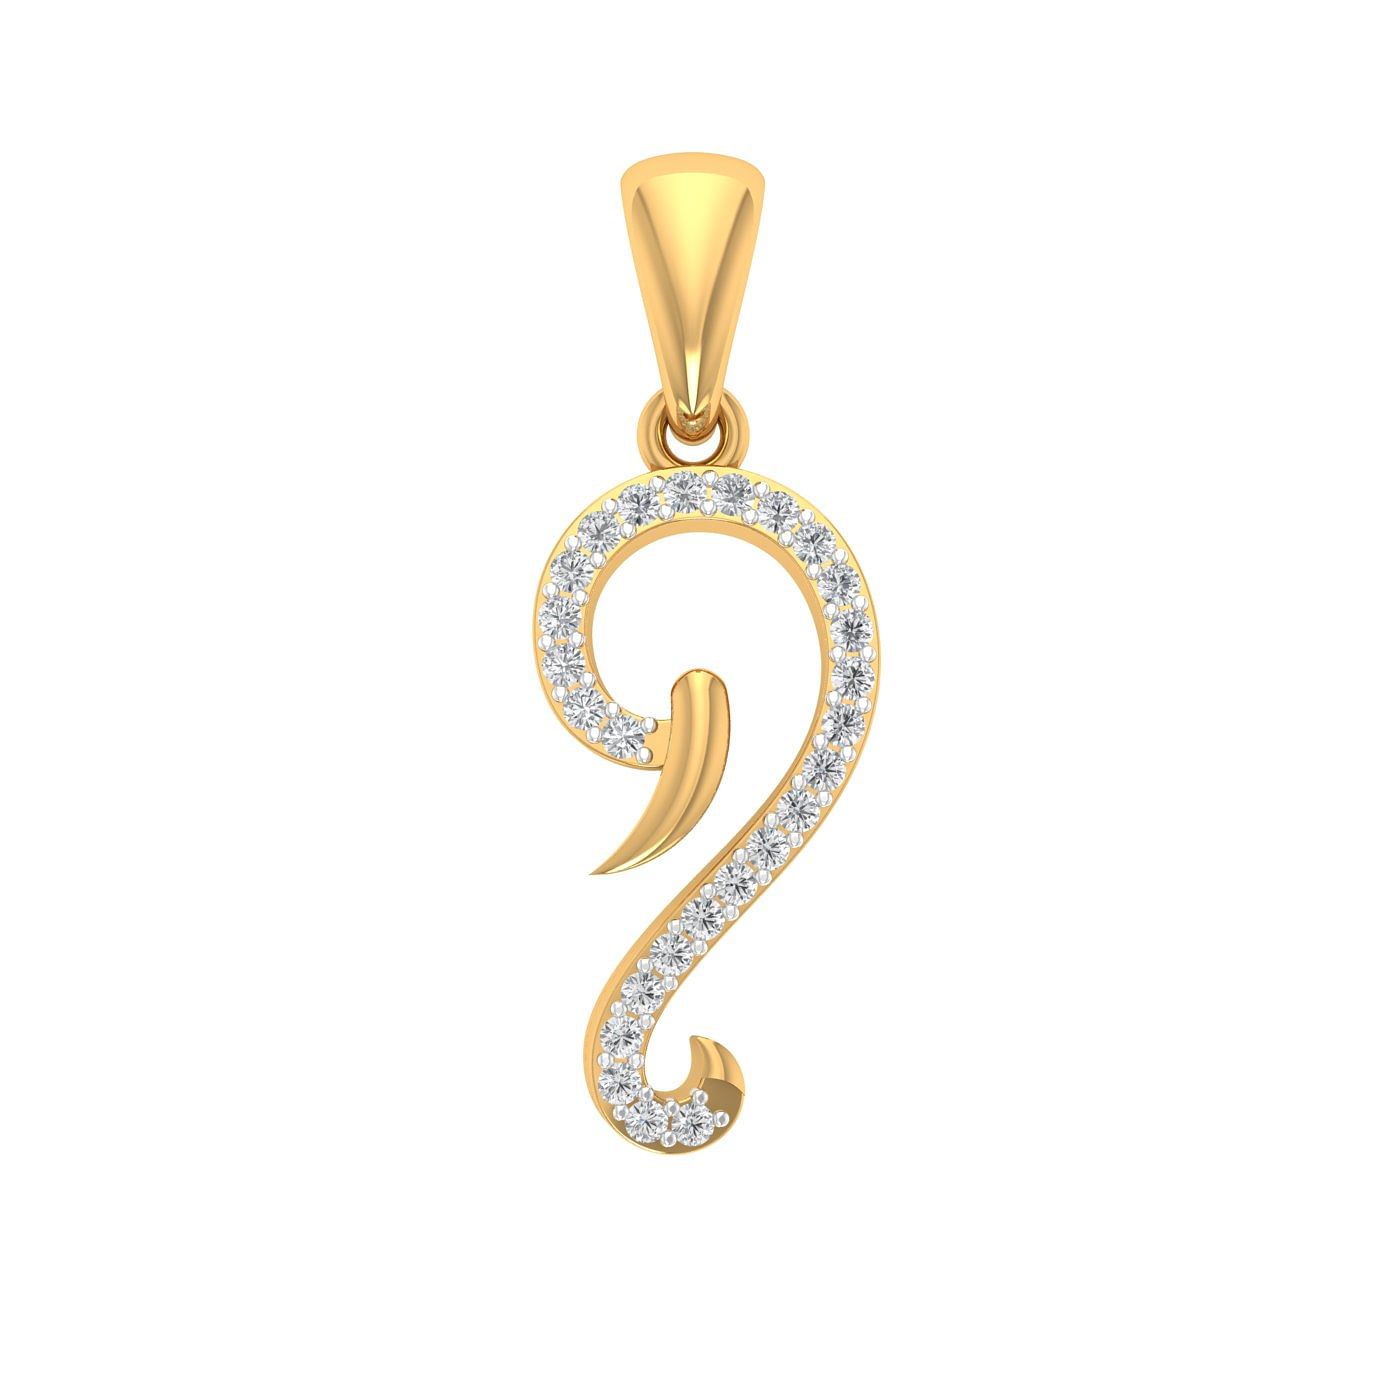 Ganesh rakhsa diamond pendant in yellow gold